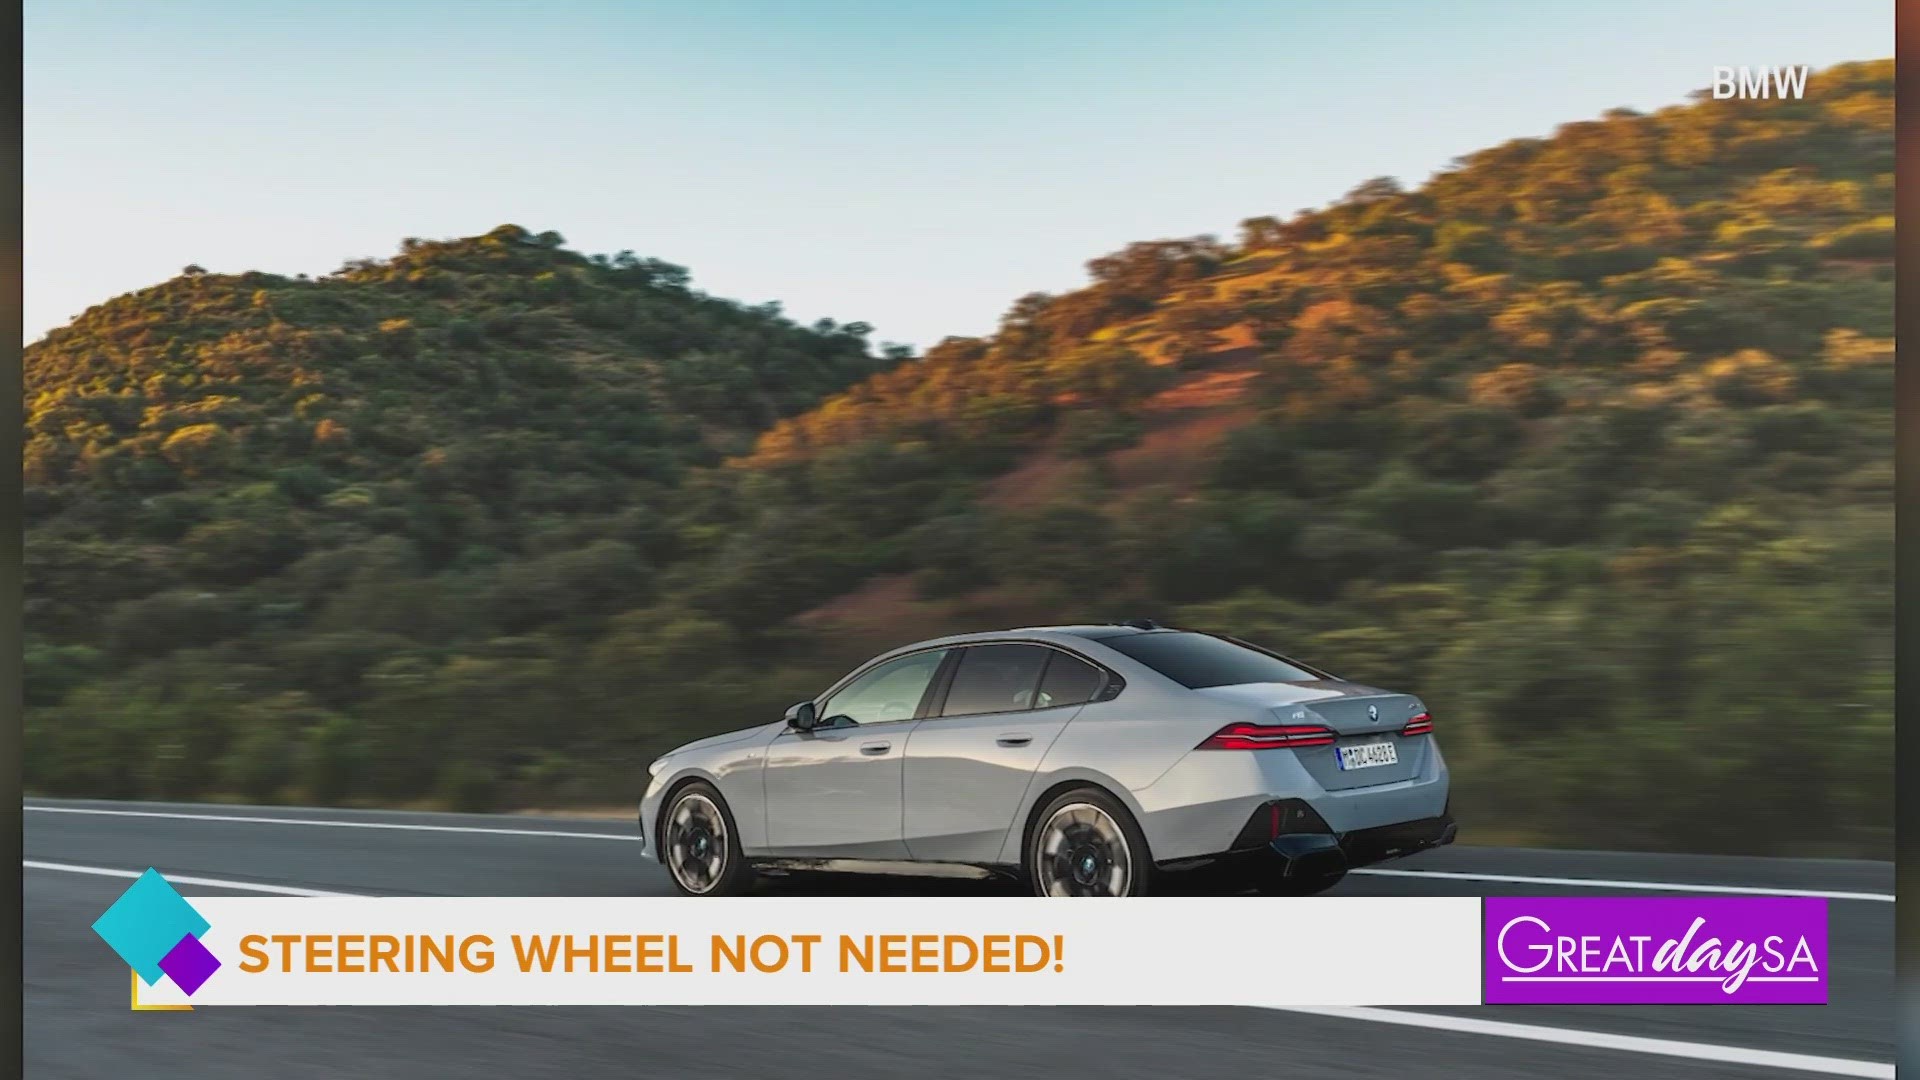 Clarke keeps it 'wheel' when she learns BMW is working on releasing cars without steering wheels.